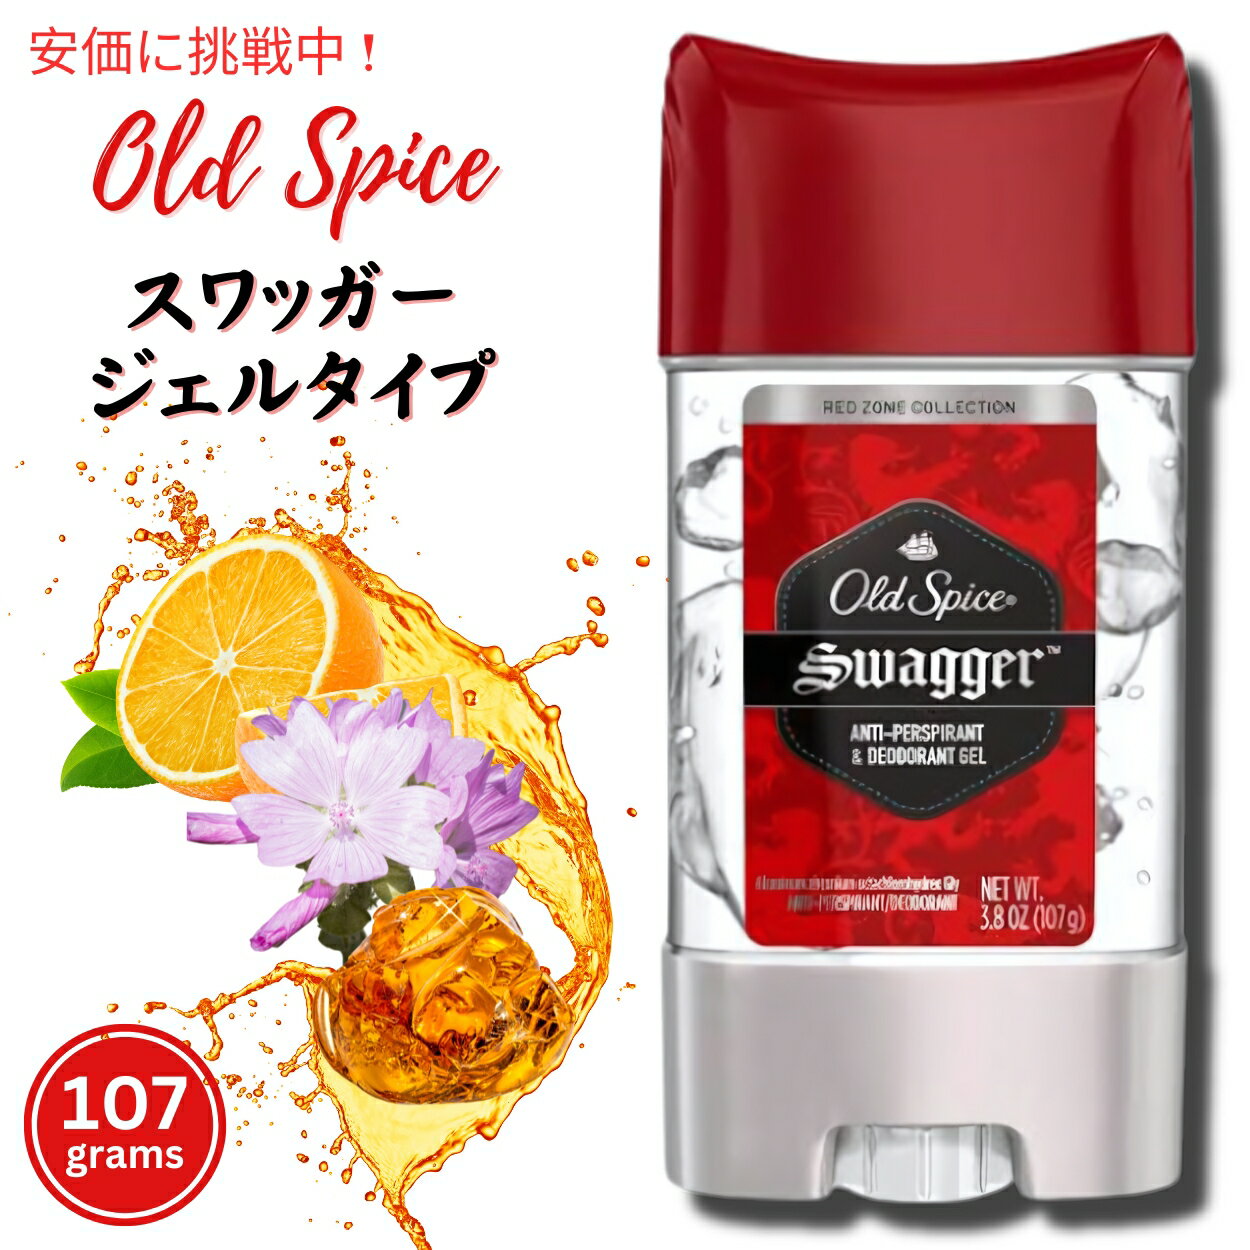 Old Spice I[hXpCX WF^Cv fIhg 107g [XbK[] Red Zone GEL Deodorant Swagger Scent 3.8oz